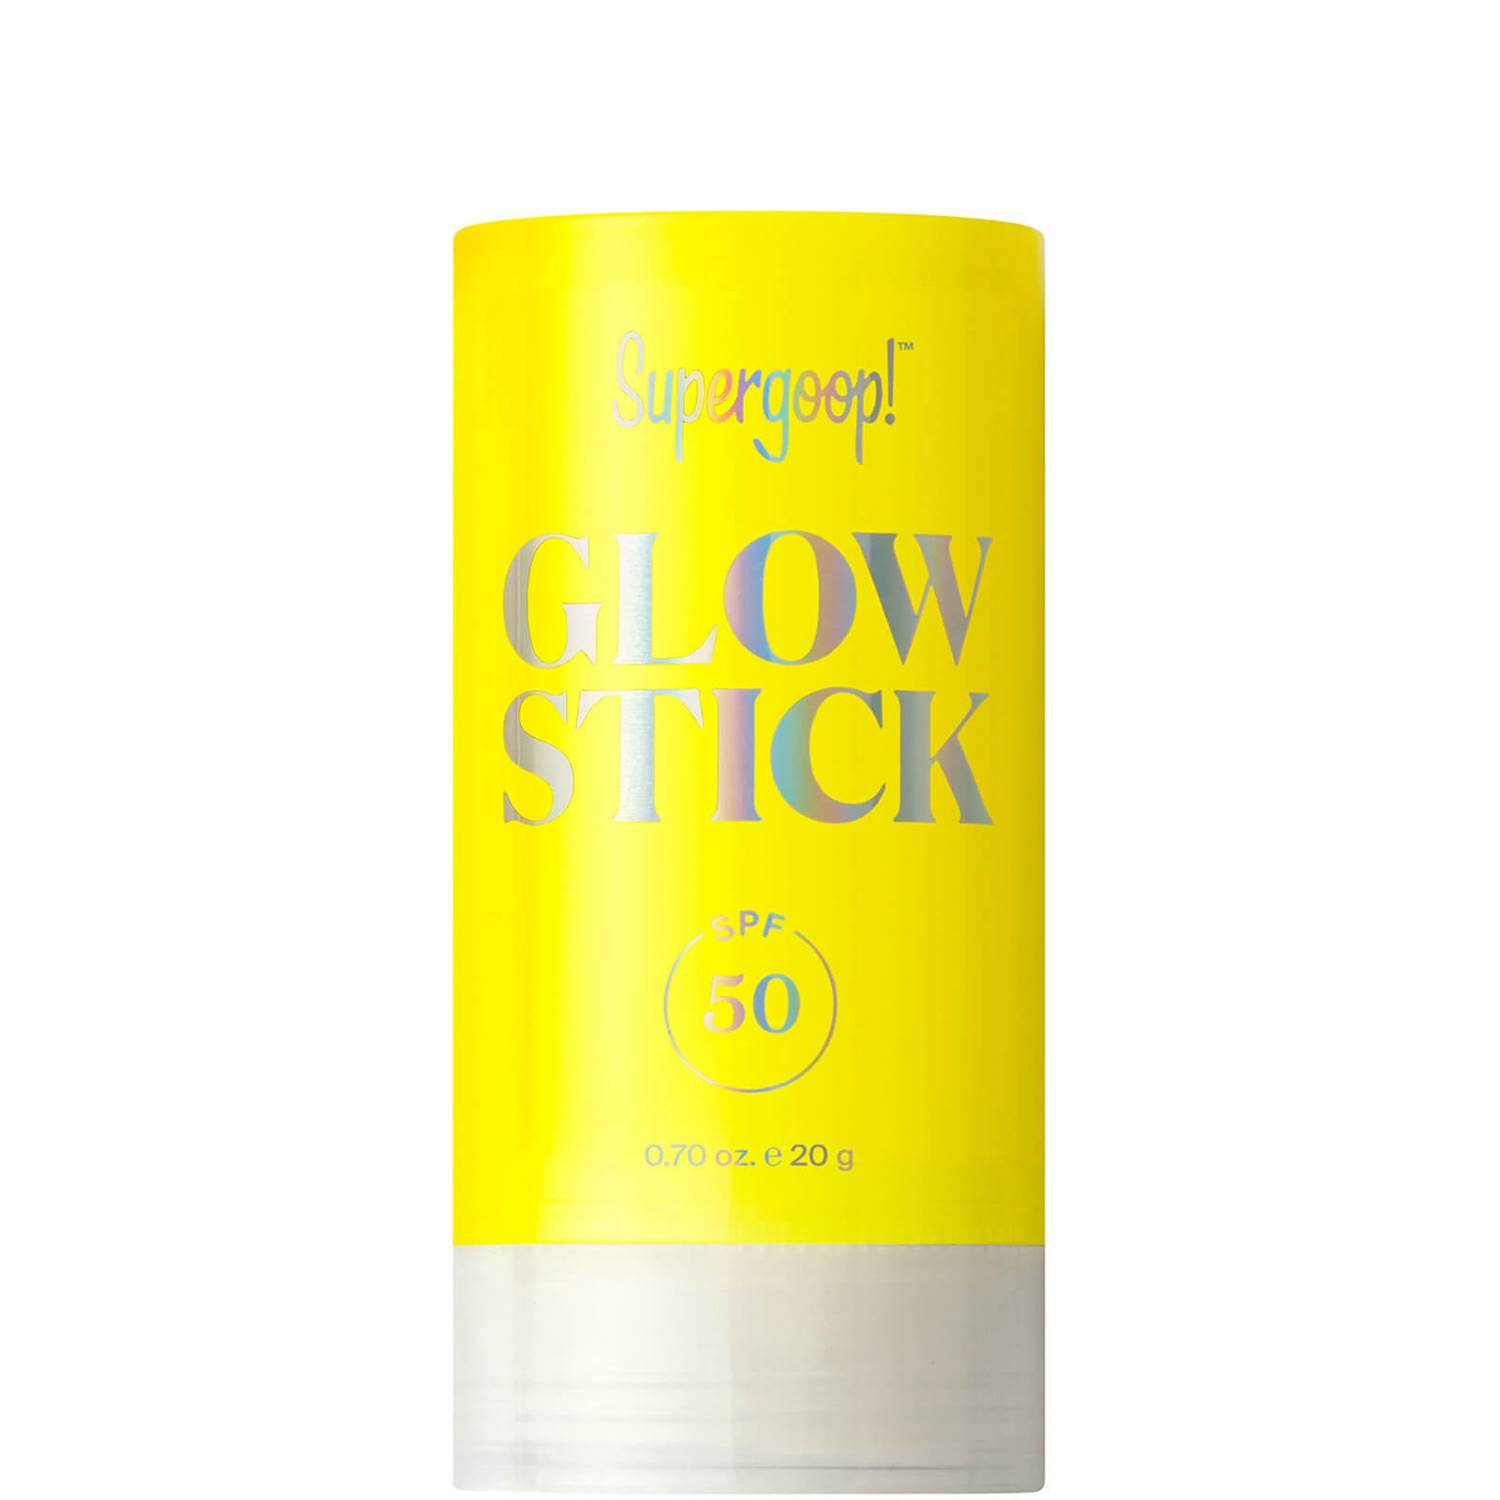 Supergoop! Glow Stick SPF 50 - Beautynation - International Makeup